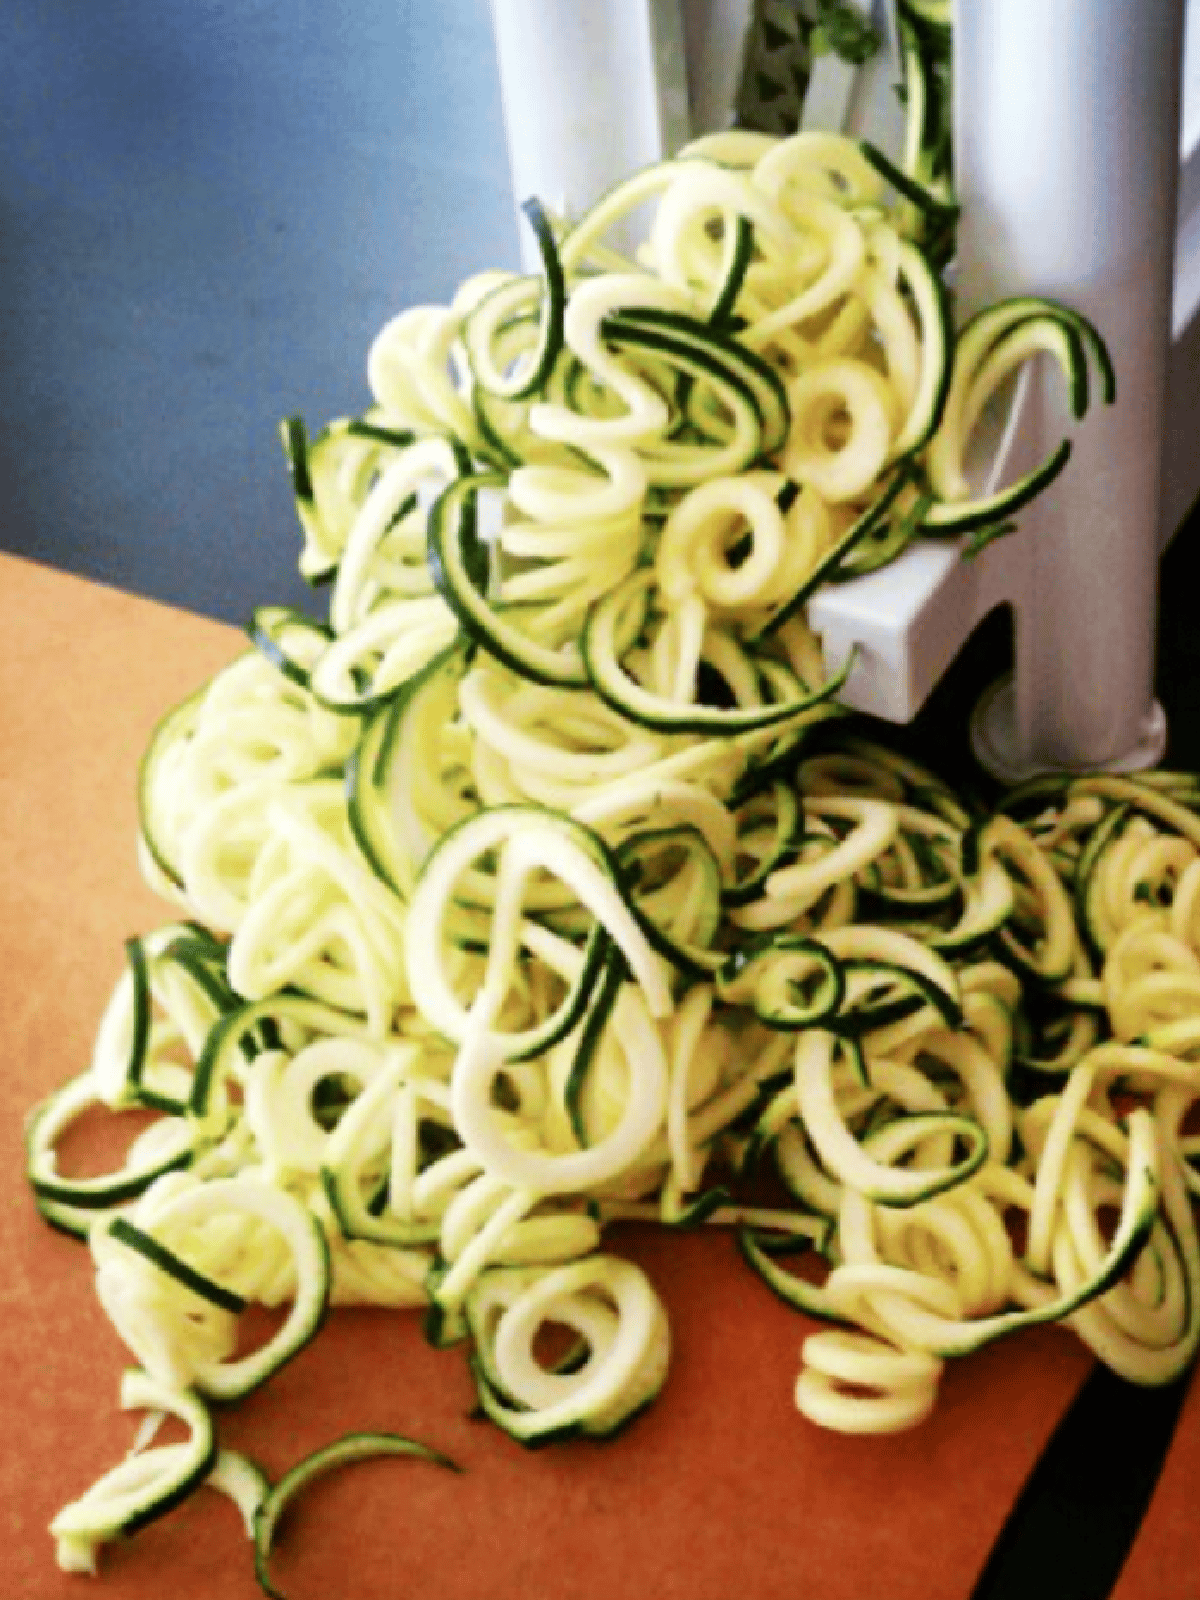 zucchini spirals coming out of the white spiralizer machine.